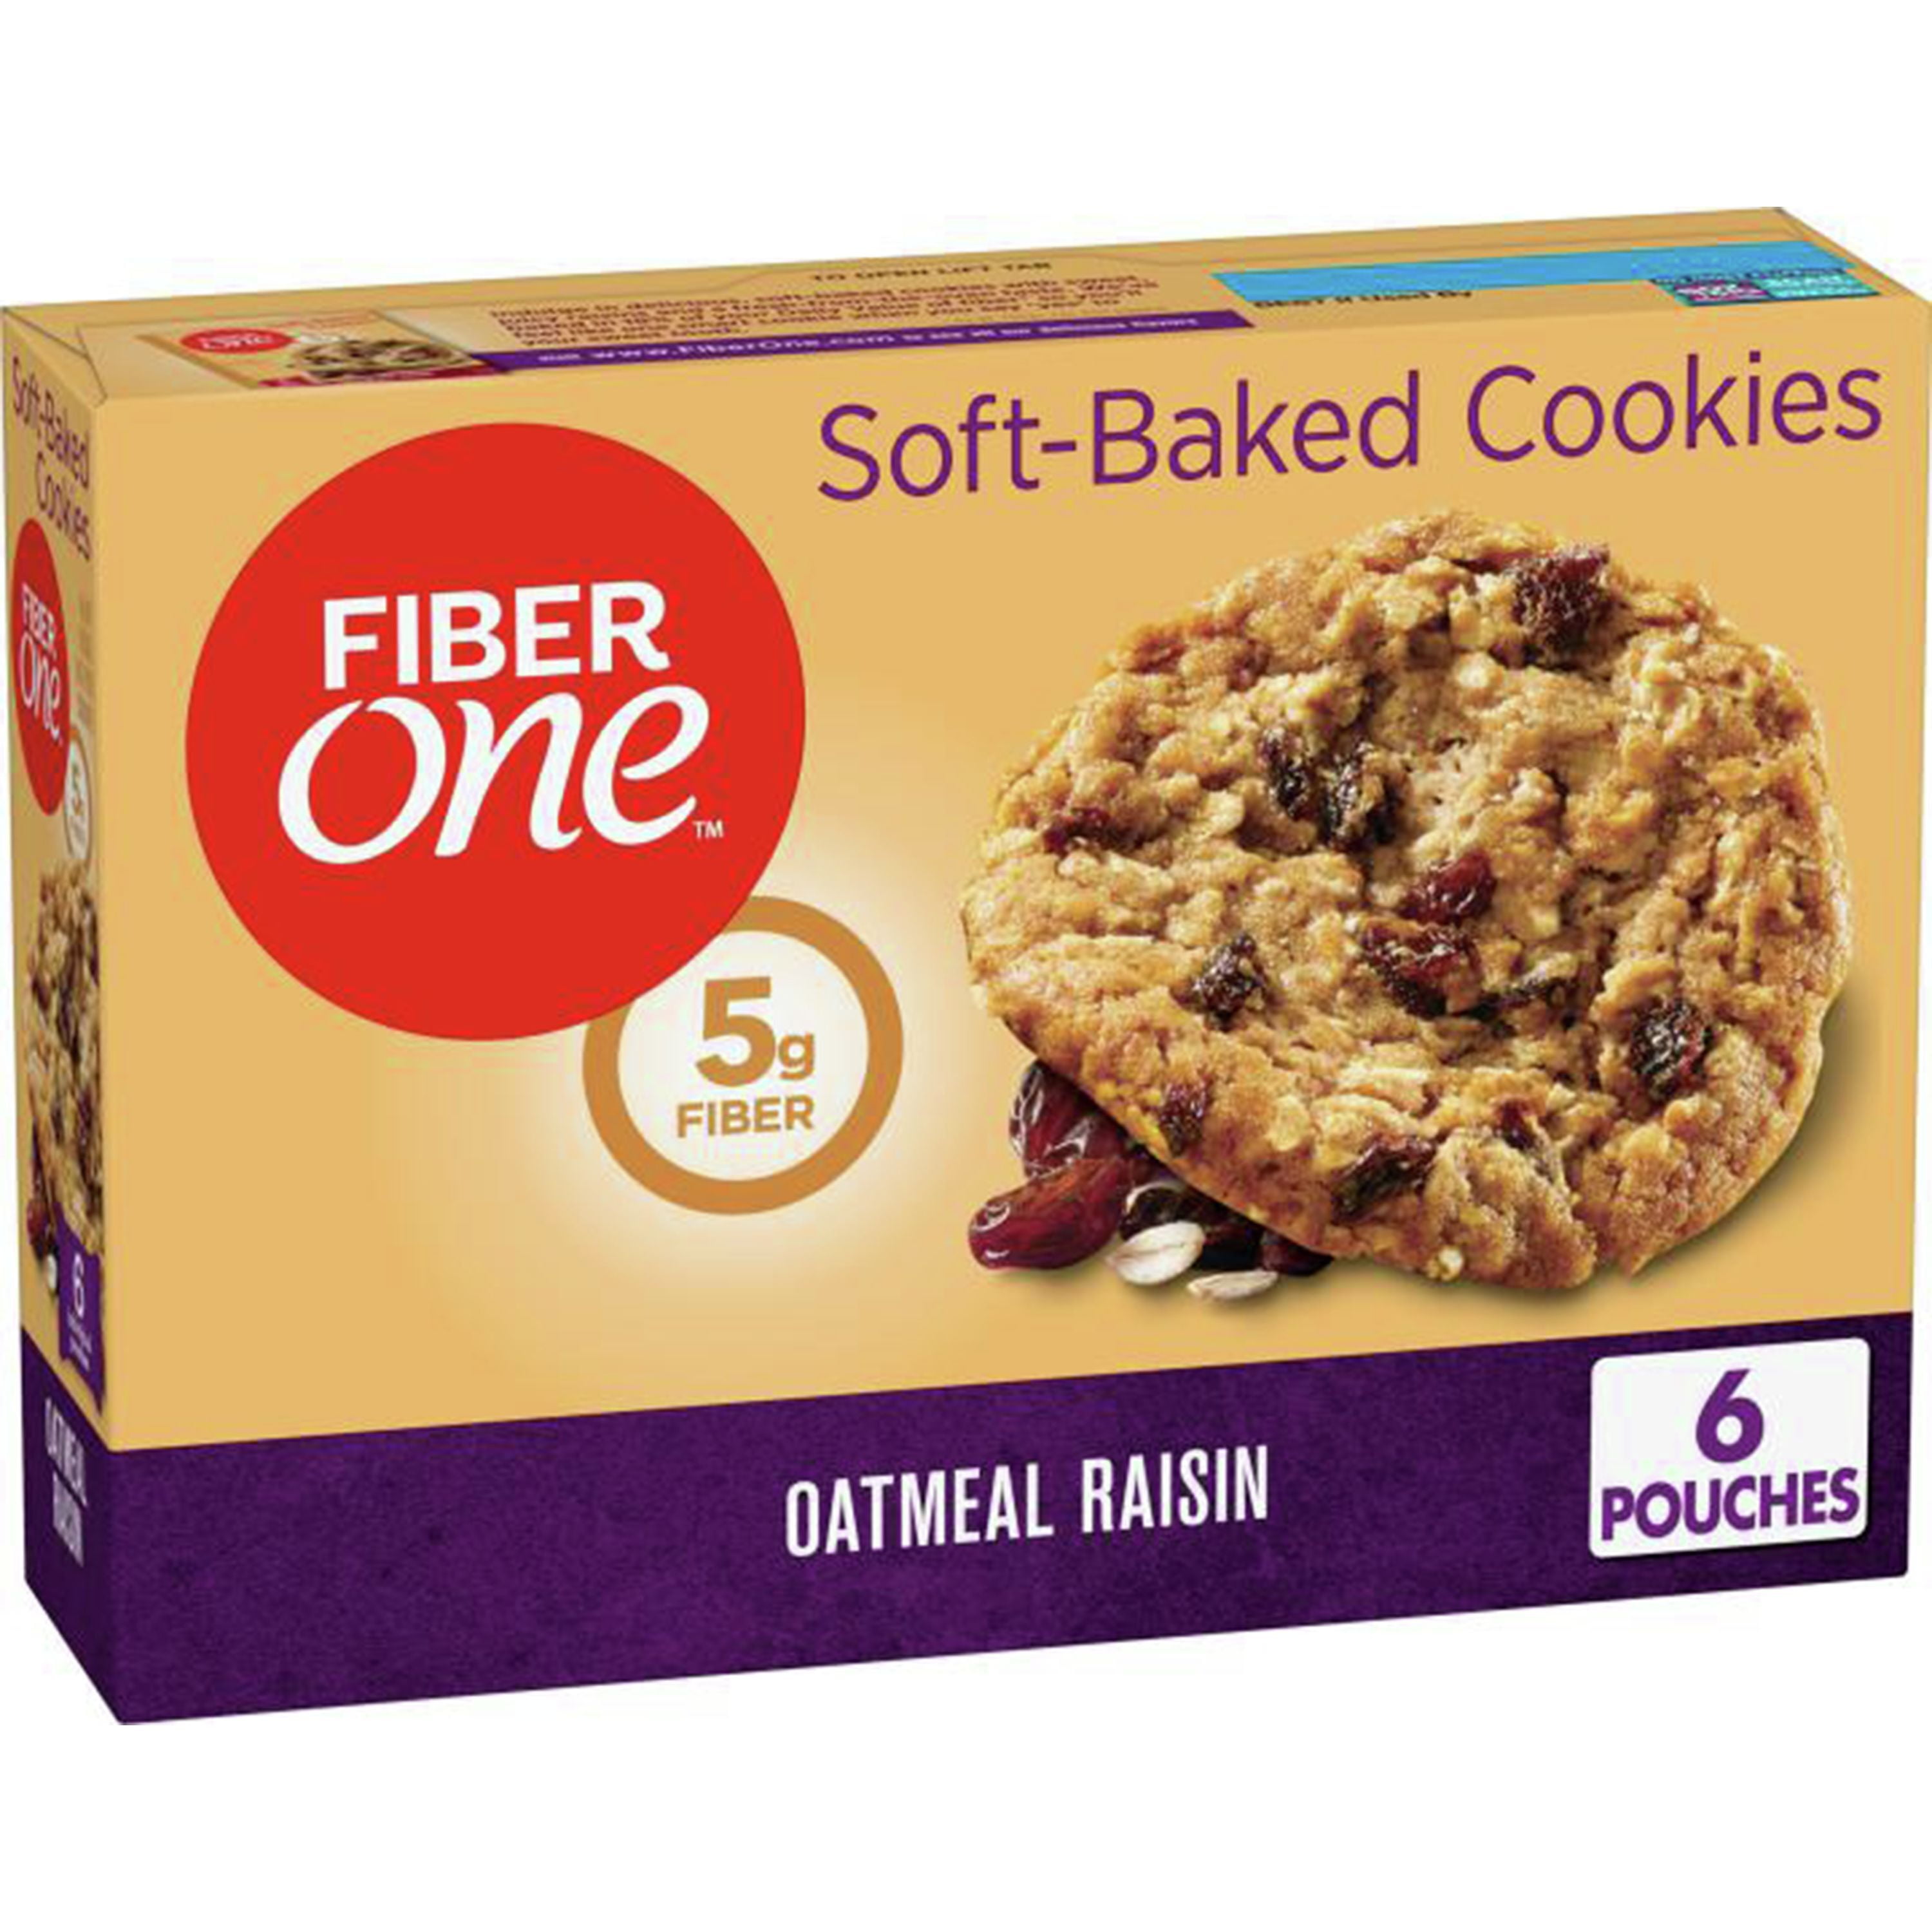 Fiber One Soft-Baked Cookies, Oatmeal Raisin, 1.1 oz, 6 ct